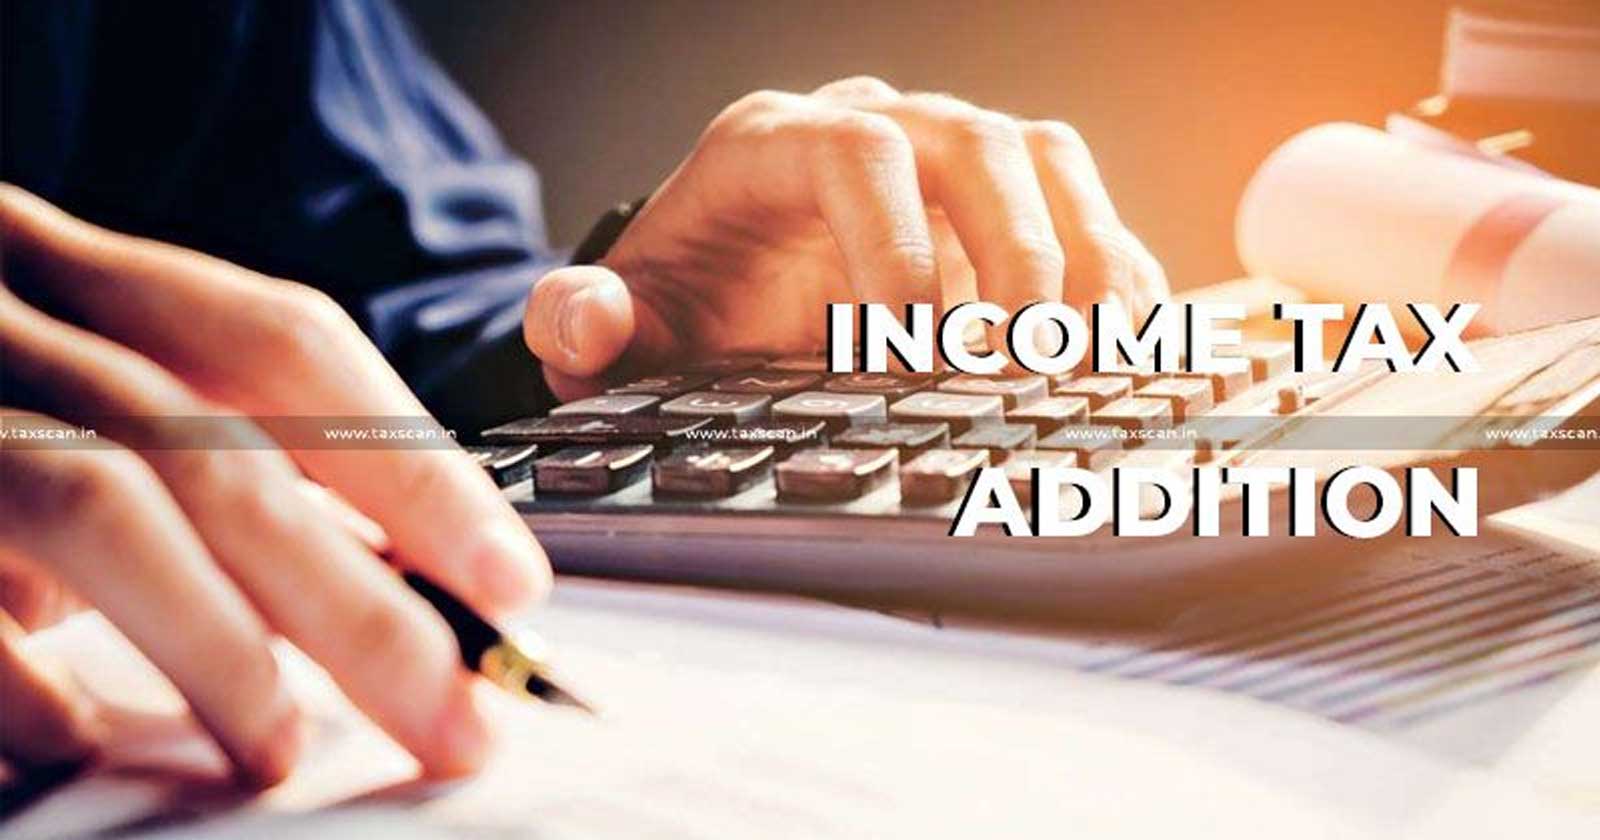 Income-Tax-Addition-Employee-handling-Cash-Employer-ITAT-Taxscan